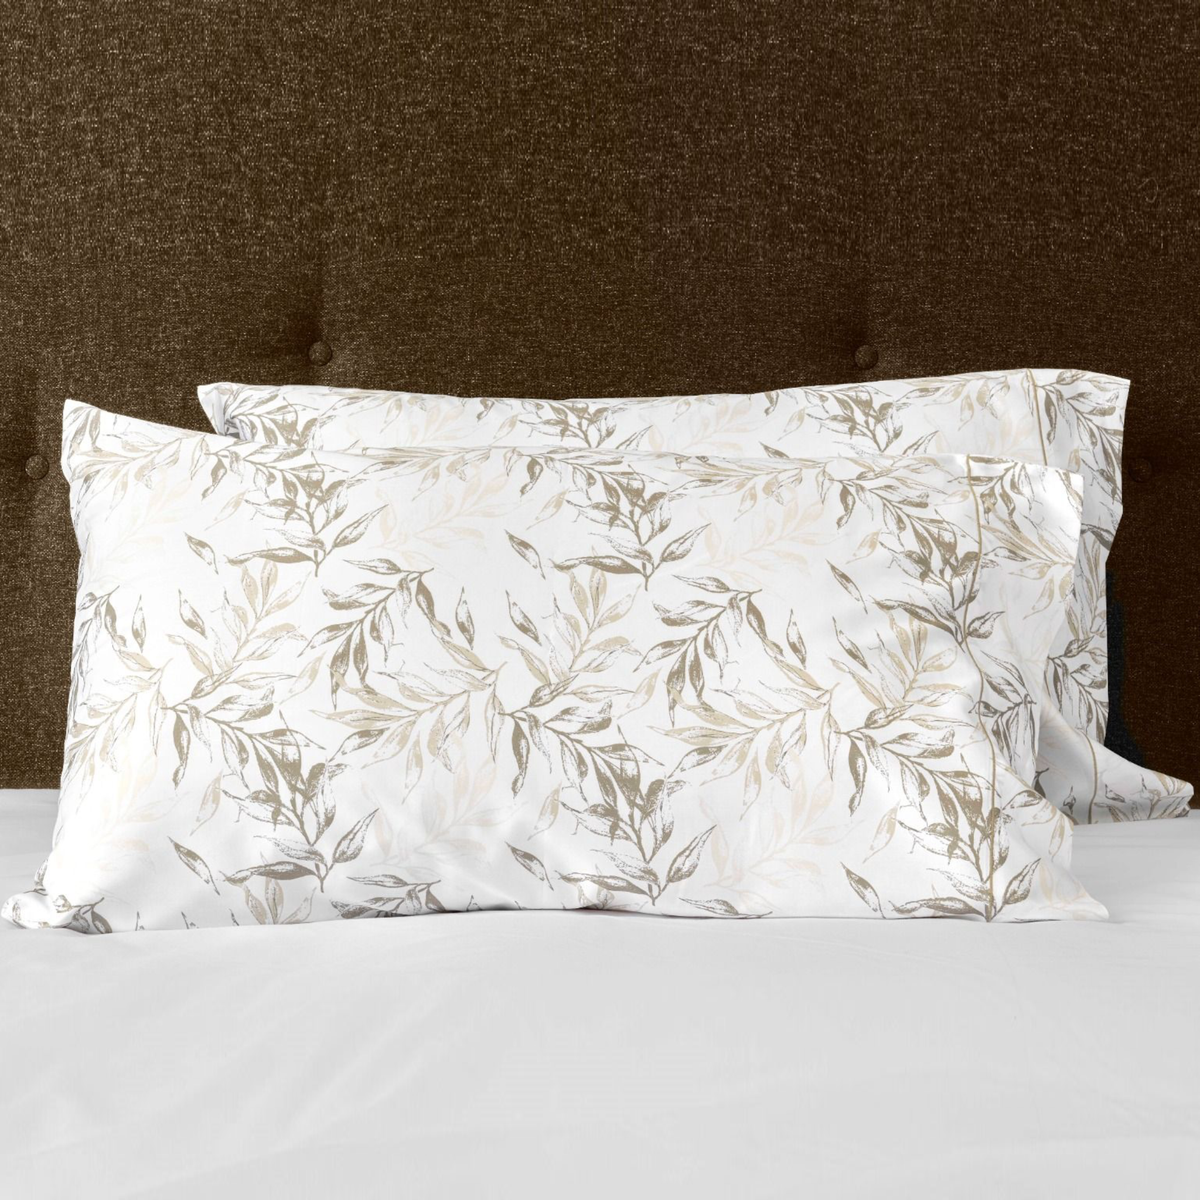 Pillowcases of Signoria Natura Bedding in Beige Color